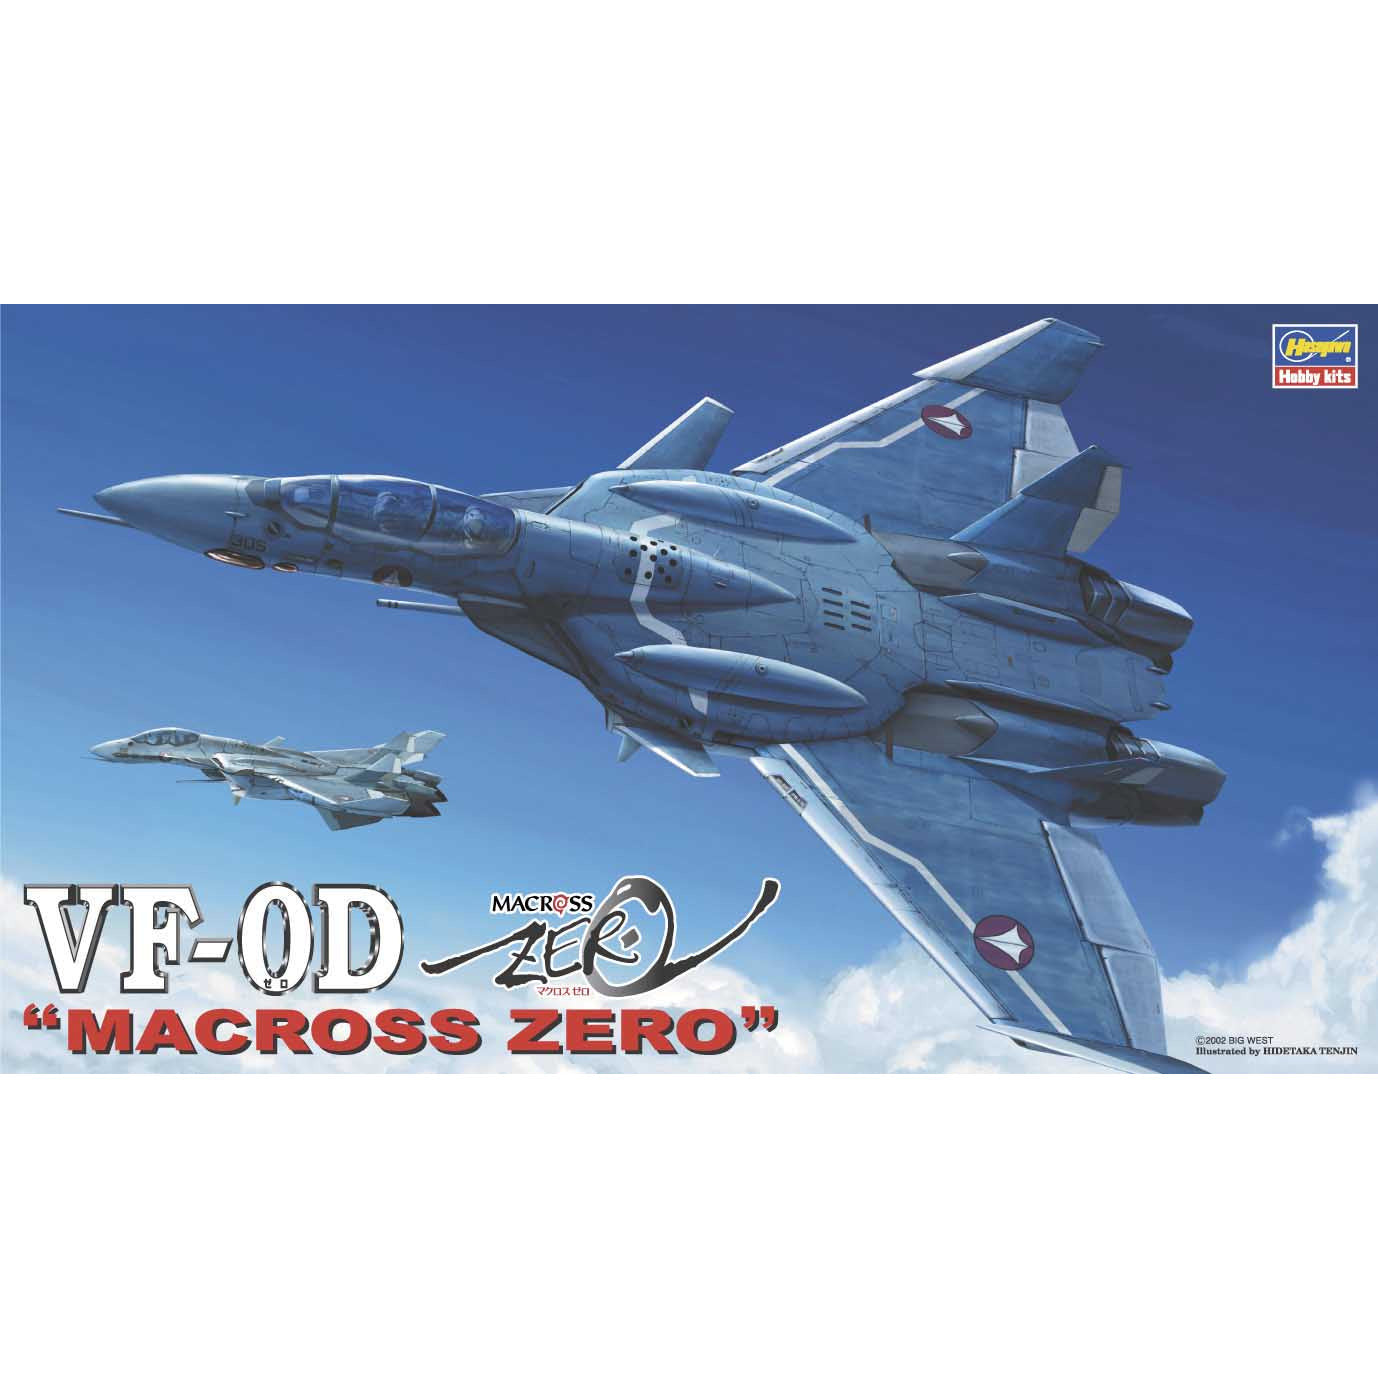 Macross Zero VF-0D 1/72 #65718 by Hasegawa